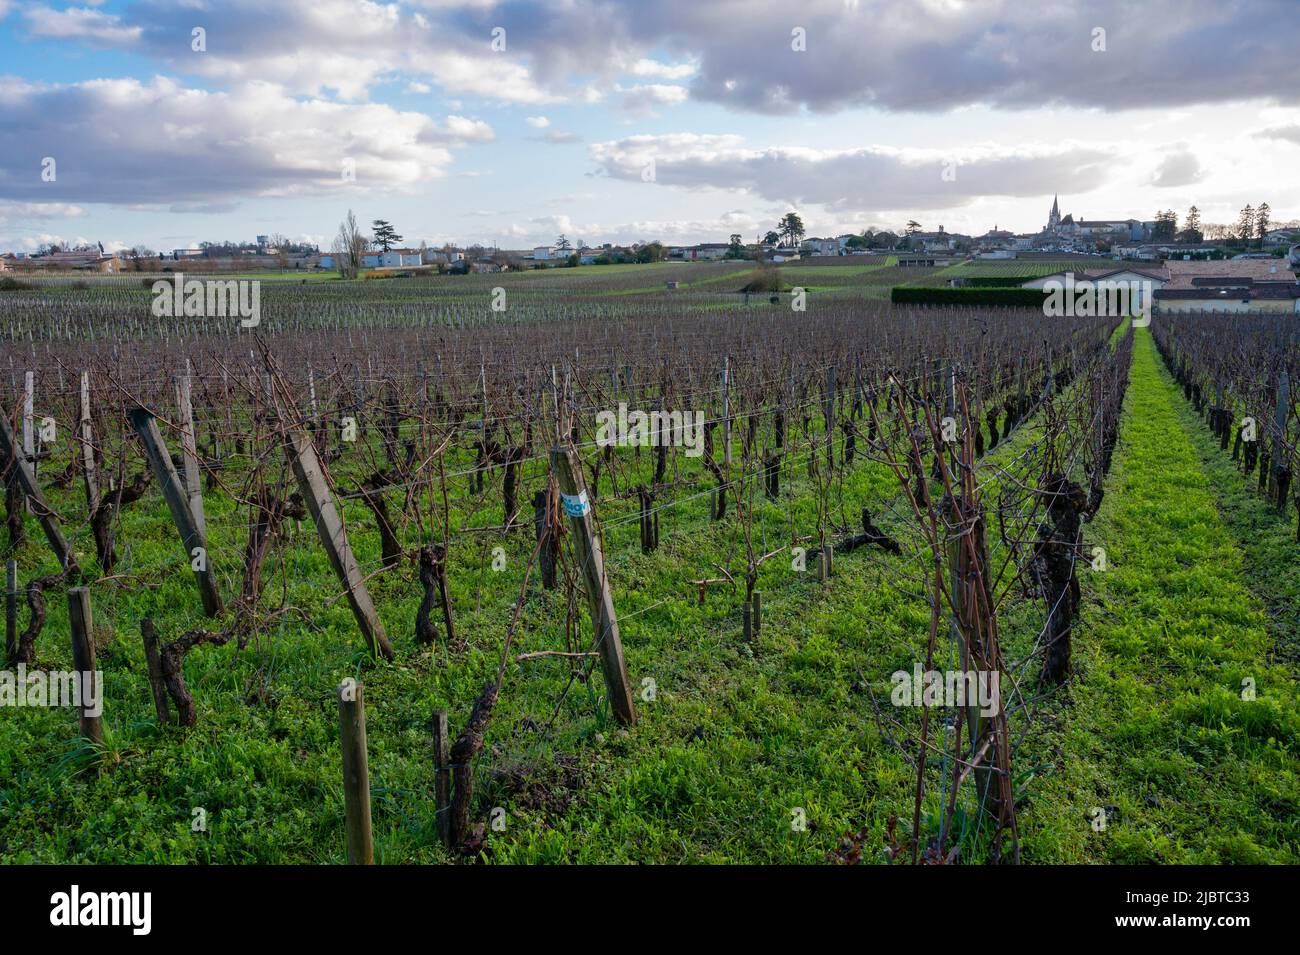 France, Gironde (33), Saint-Émilion, listed as World Heritage by UNESCO, Chateau Cadet-Bon, listed as Premier Grand cru classé, the vineyards and the village of Saint Emilion Stock Photo